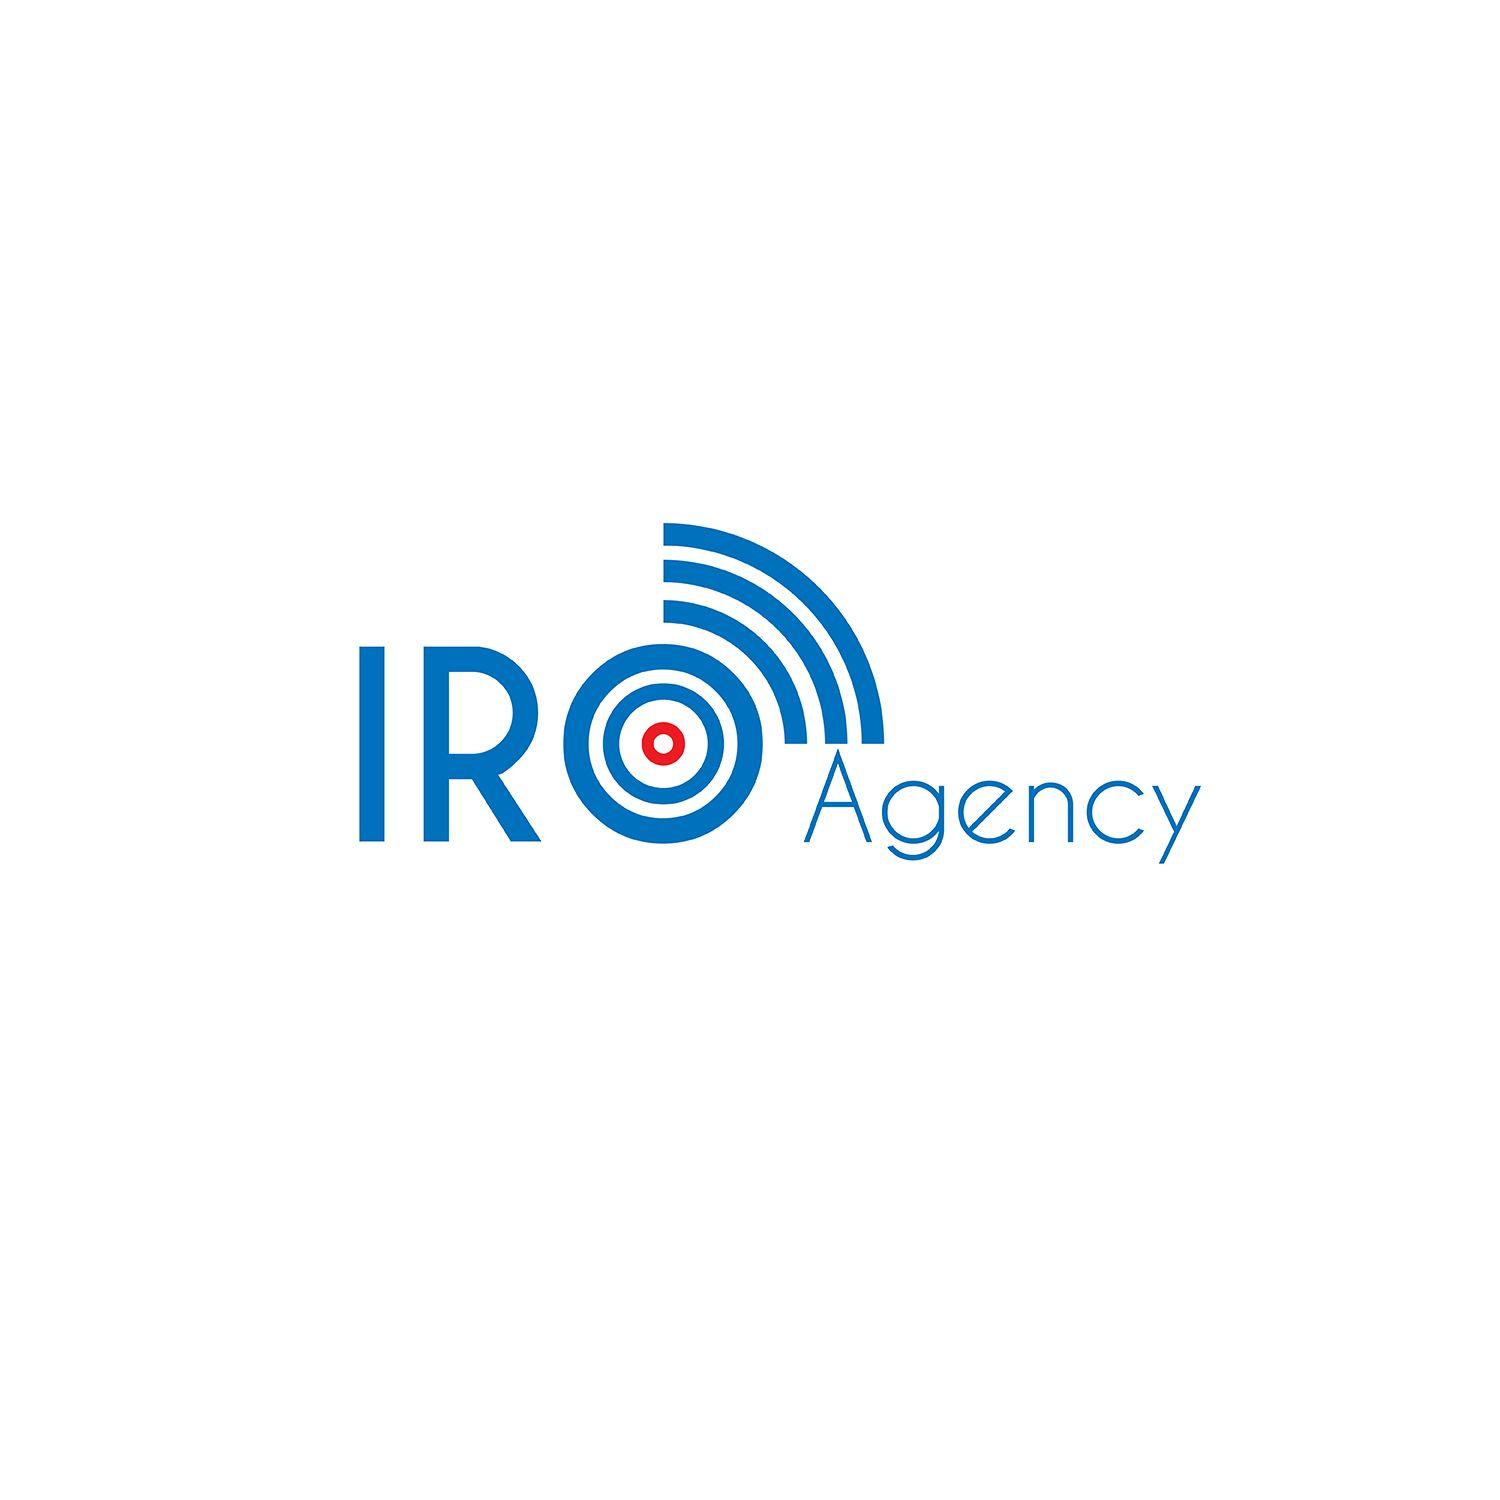 Iro Logo - LogoDix